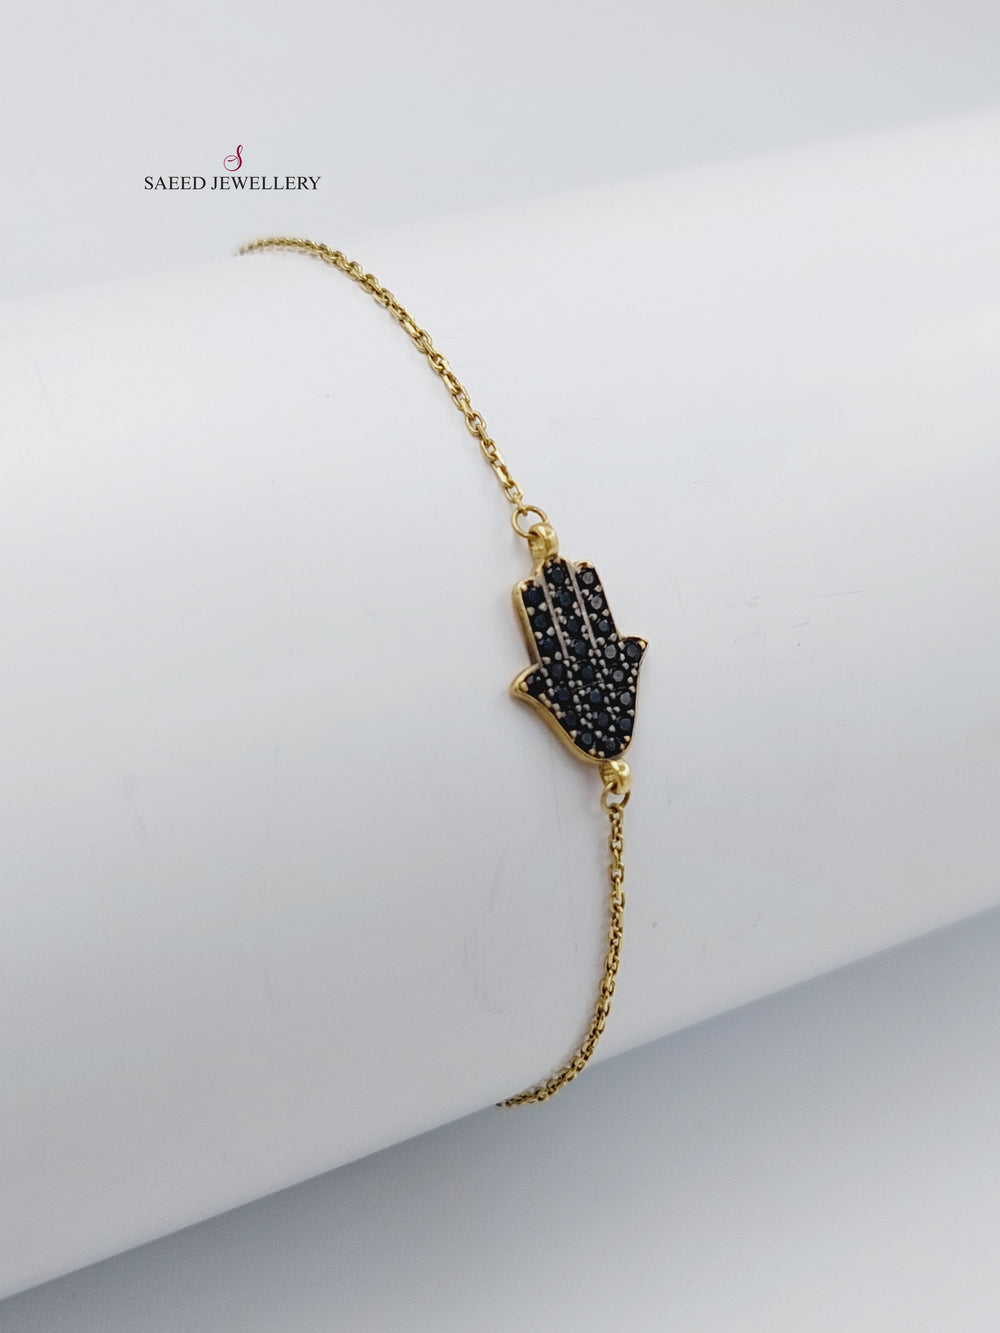 18K Gold Kaf Bracelet by Saeed Jewelry - Image 2